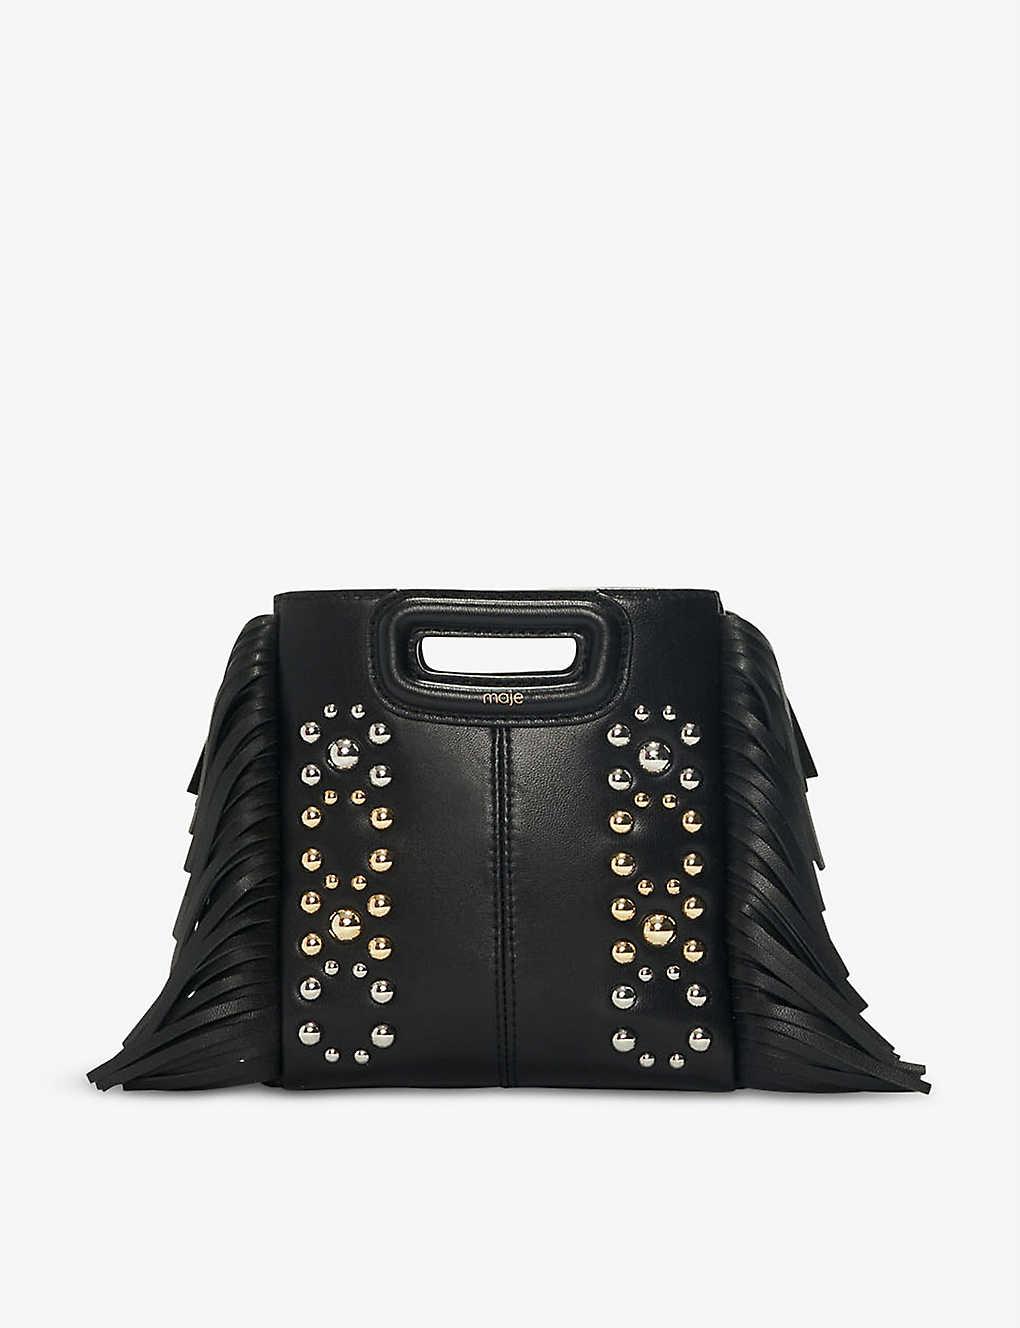 Maje M Mini Studded Leather Bag in Black